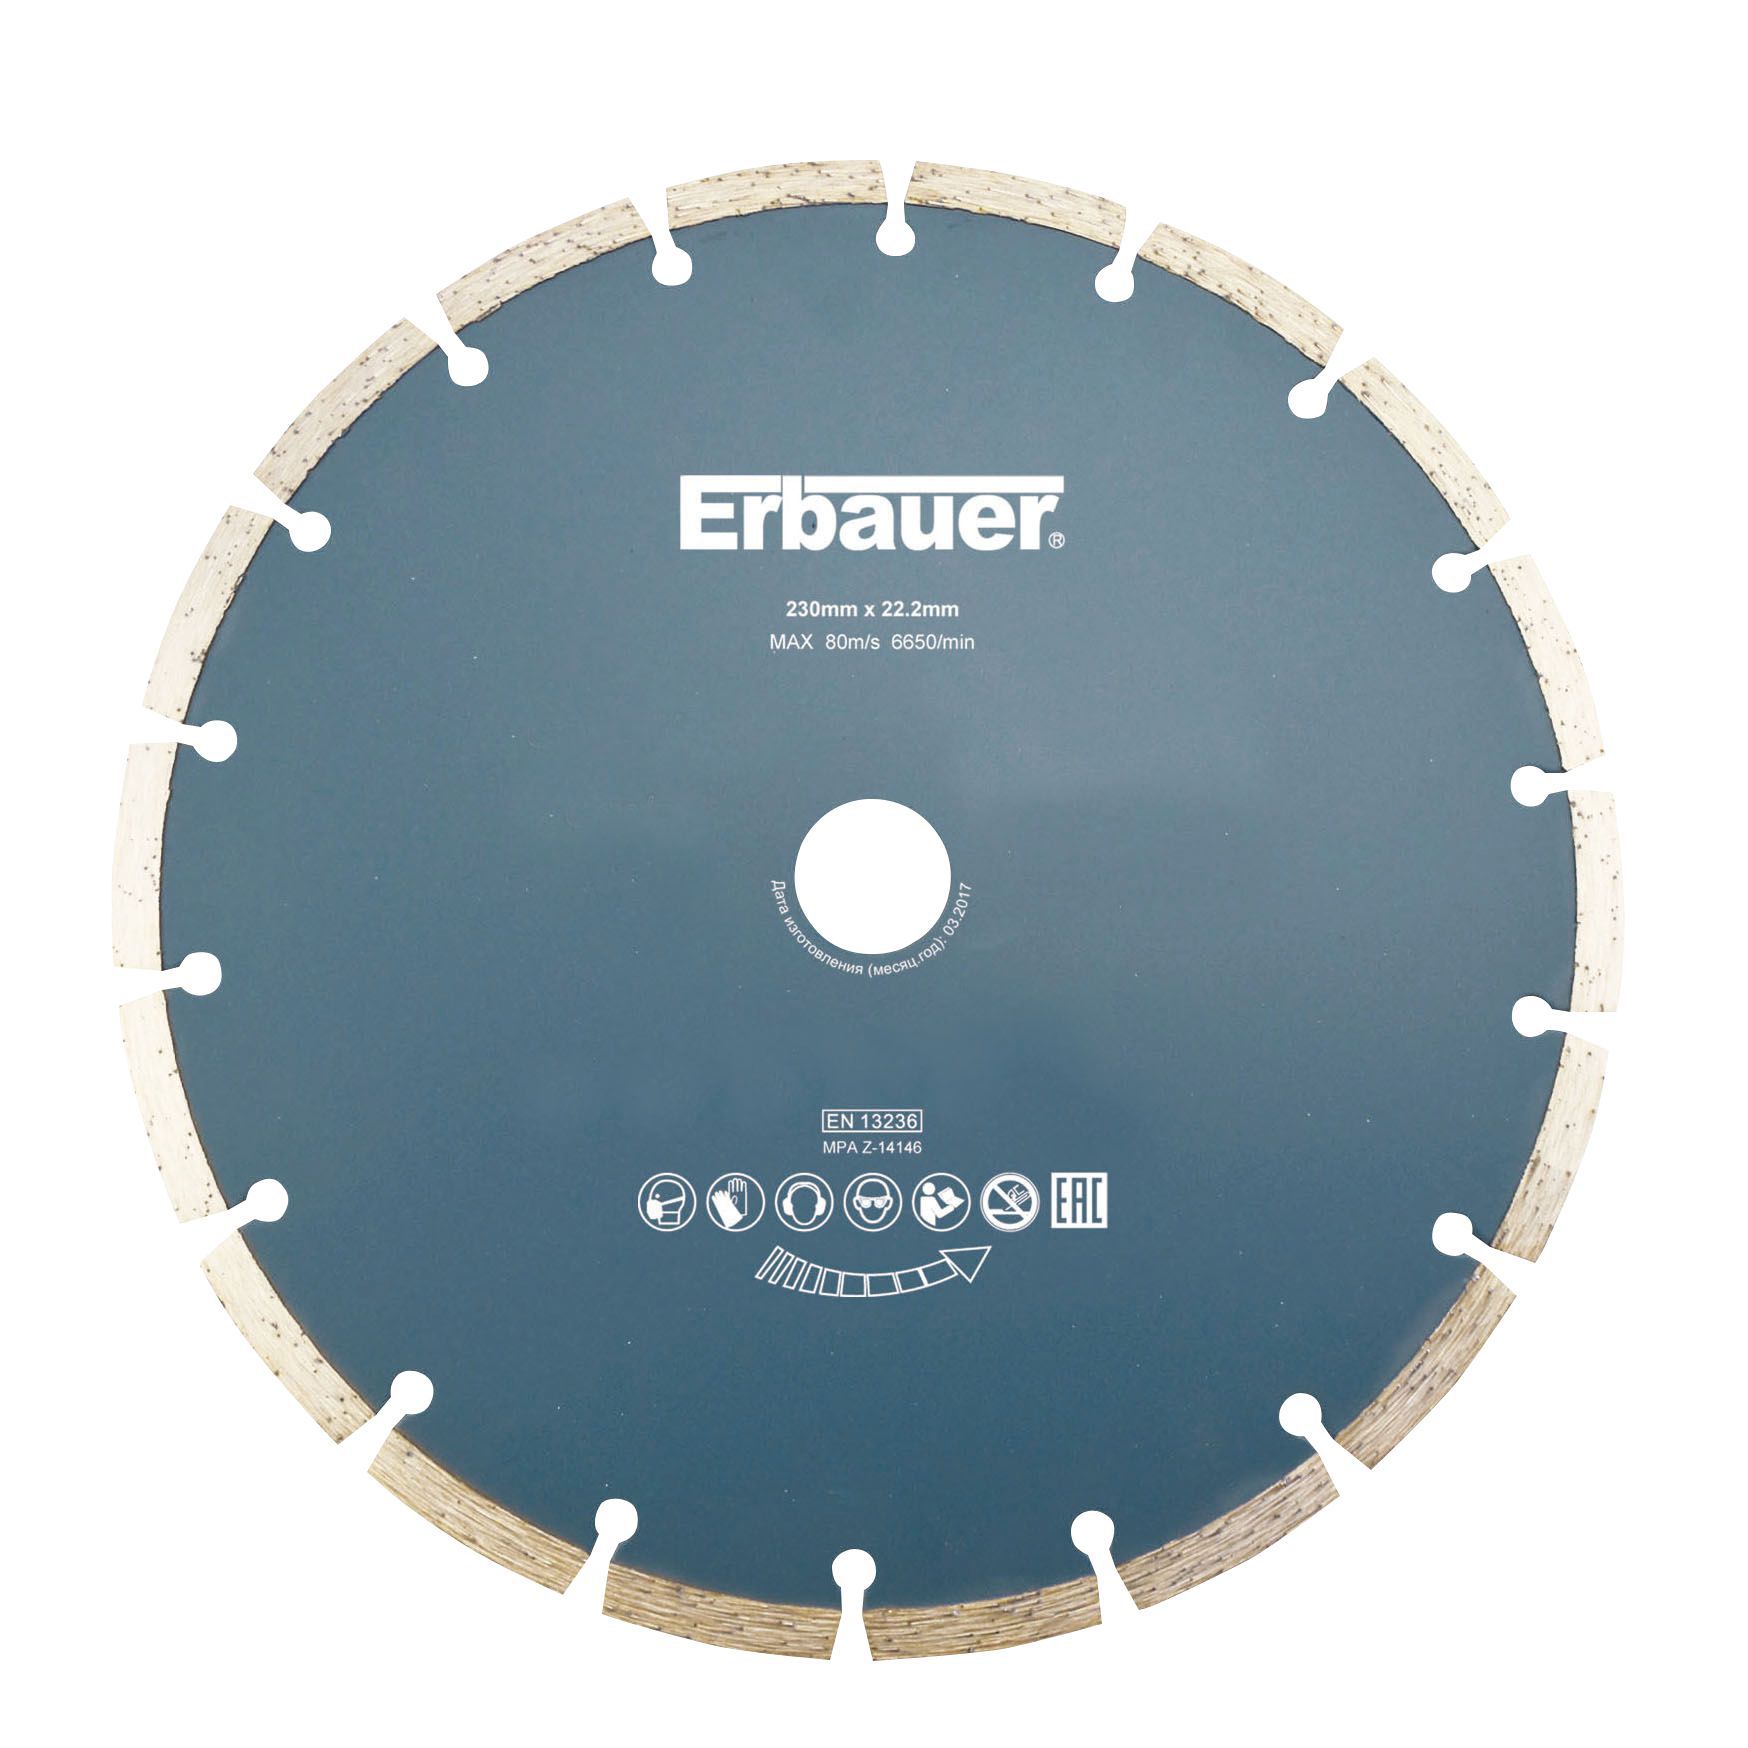 Erbauer (Dia)230mm Segmented diamond blade